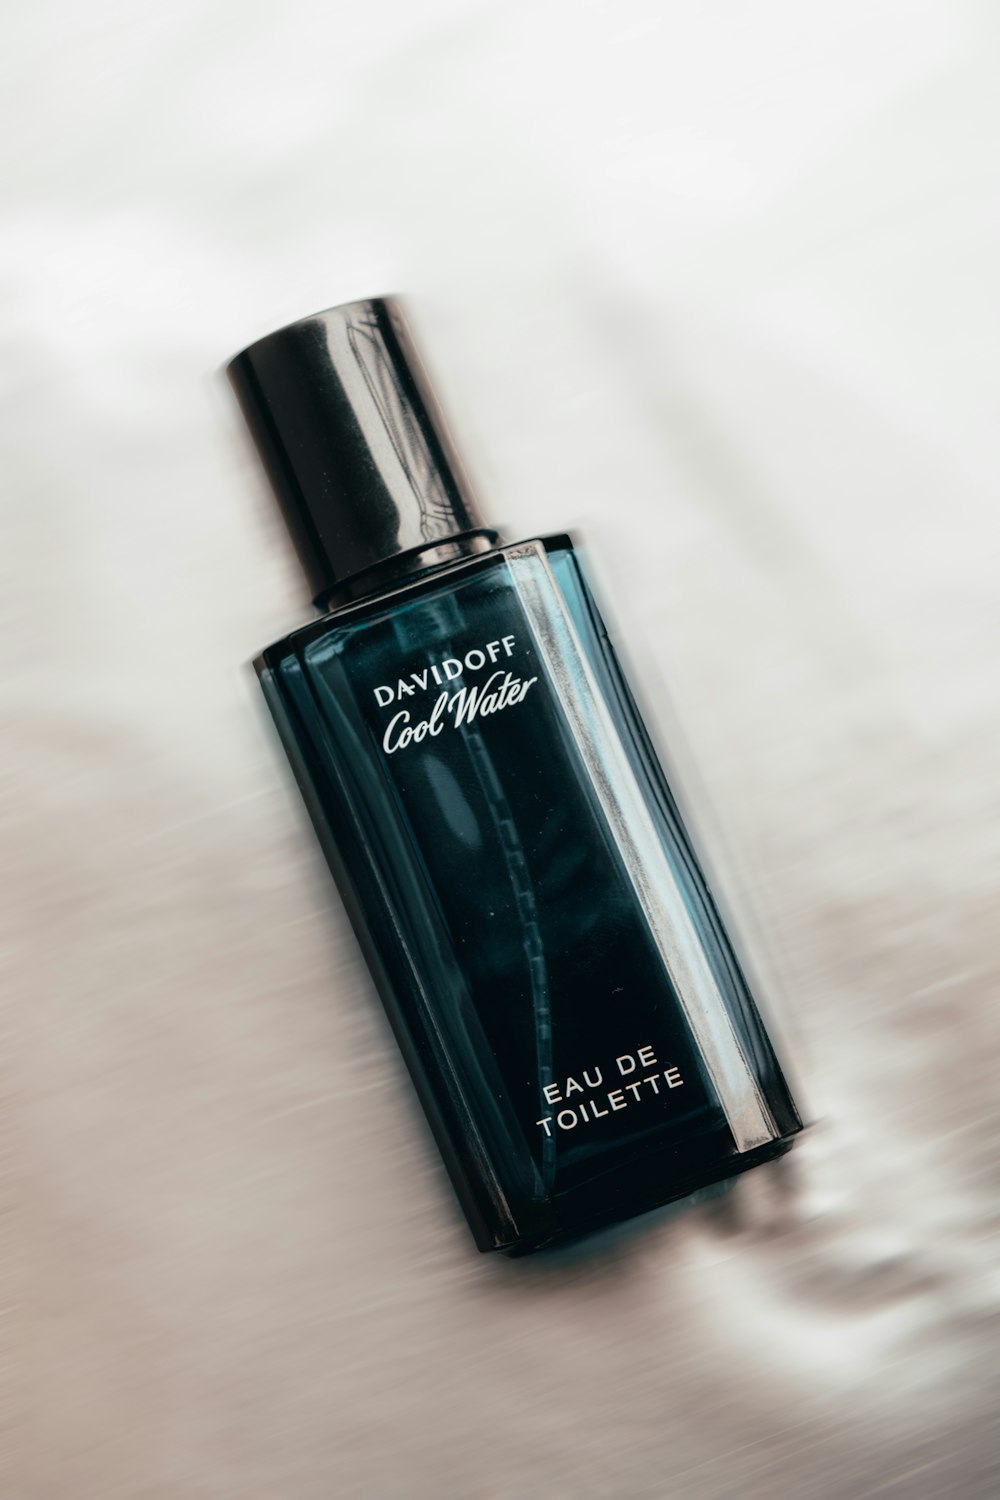 Blue and silver calvin klein perfume bottle photo – Free Style Image on  Unsplash